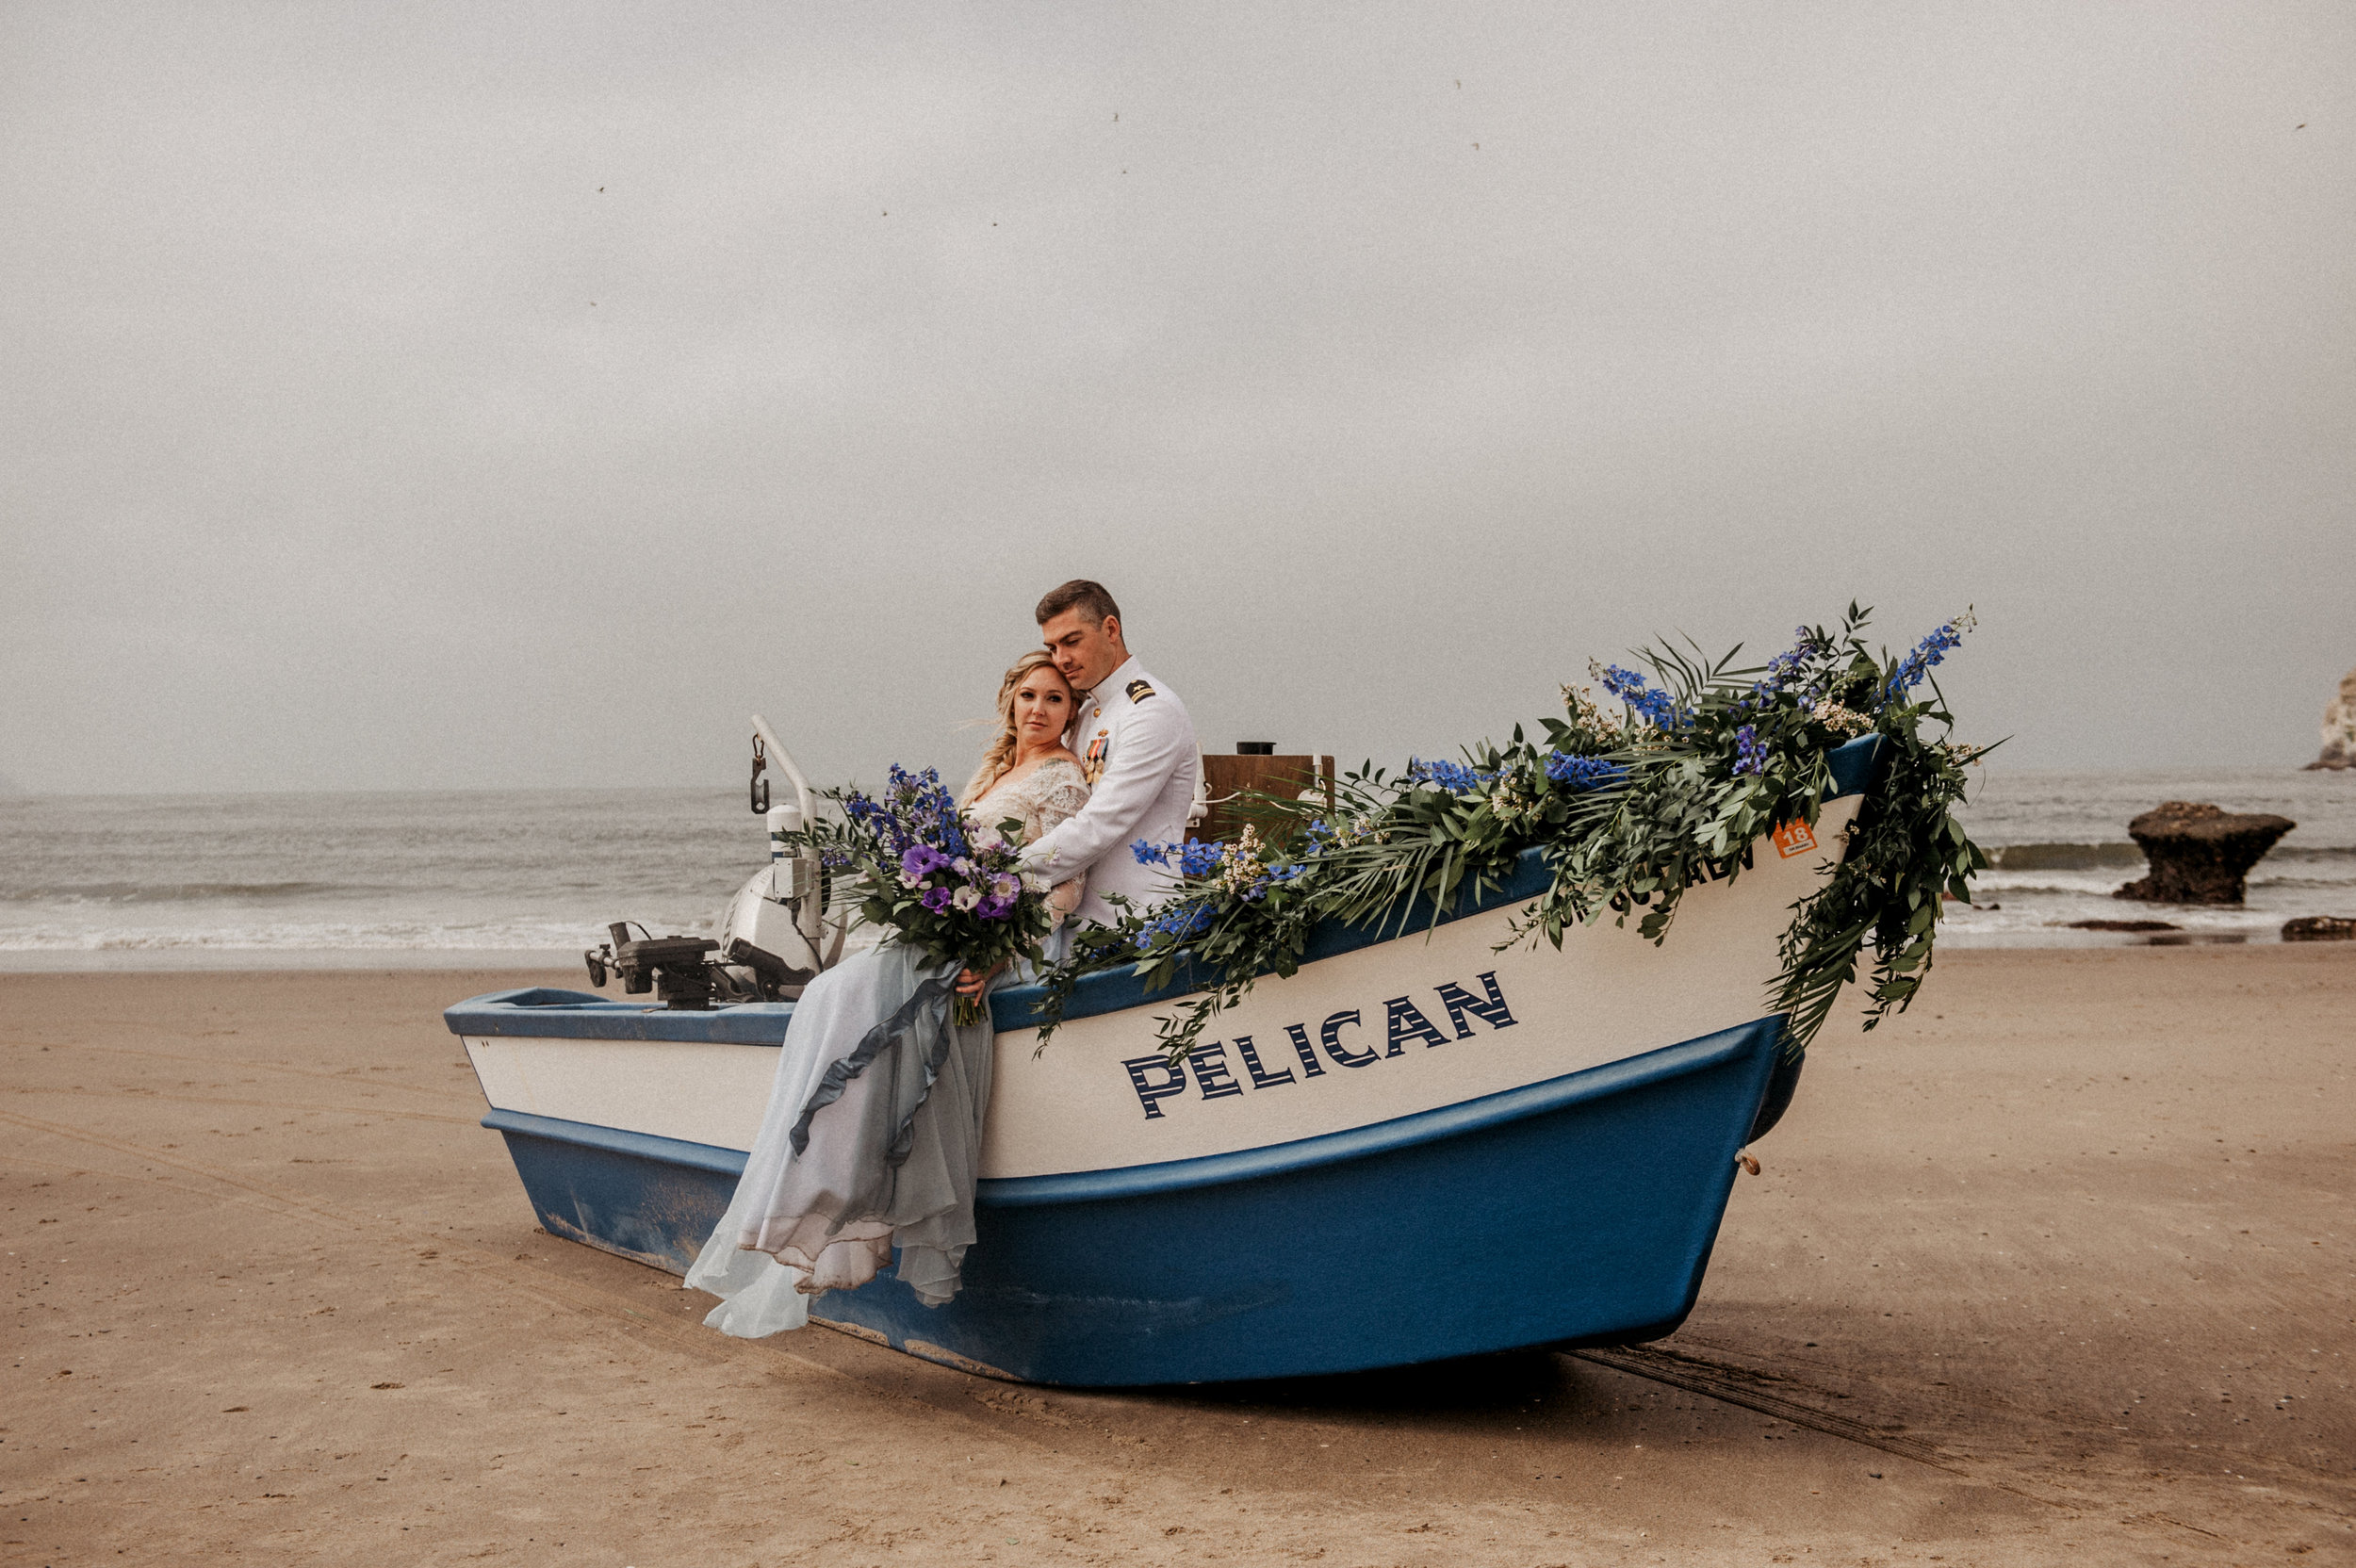 Imago Dei Photography-Pelican Brewery Wedding-219.jpg